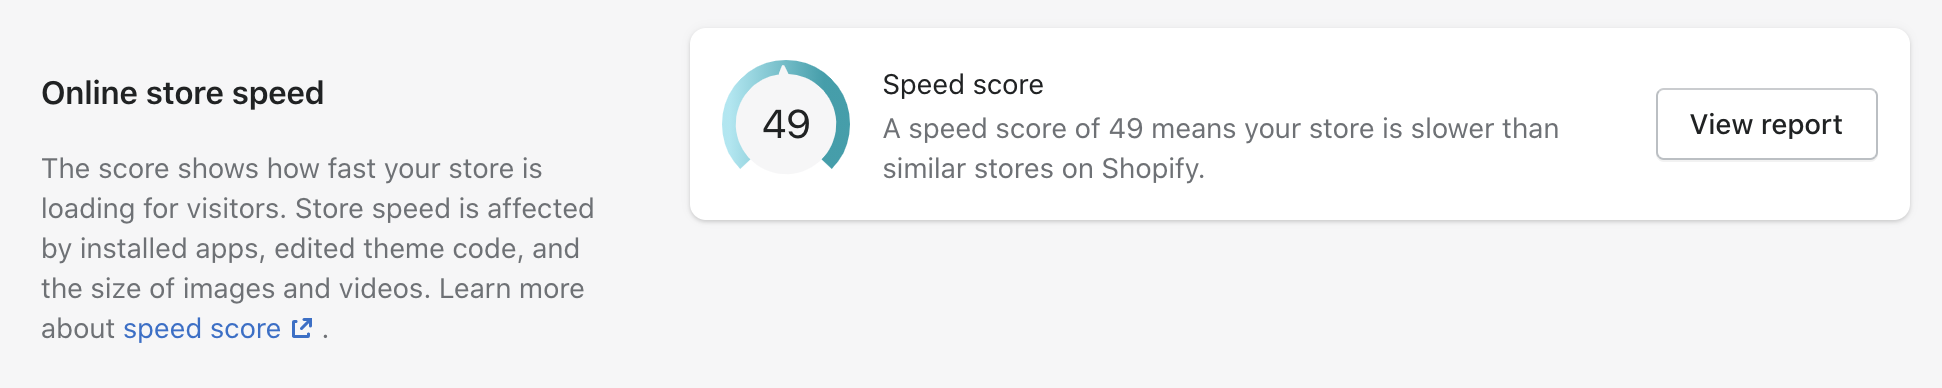 online_speed_score.png